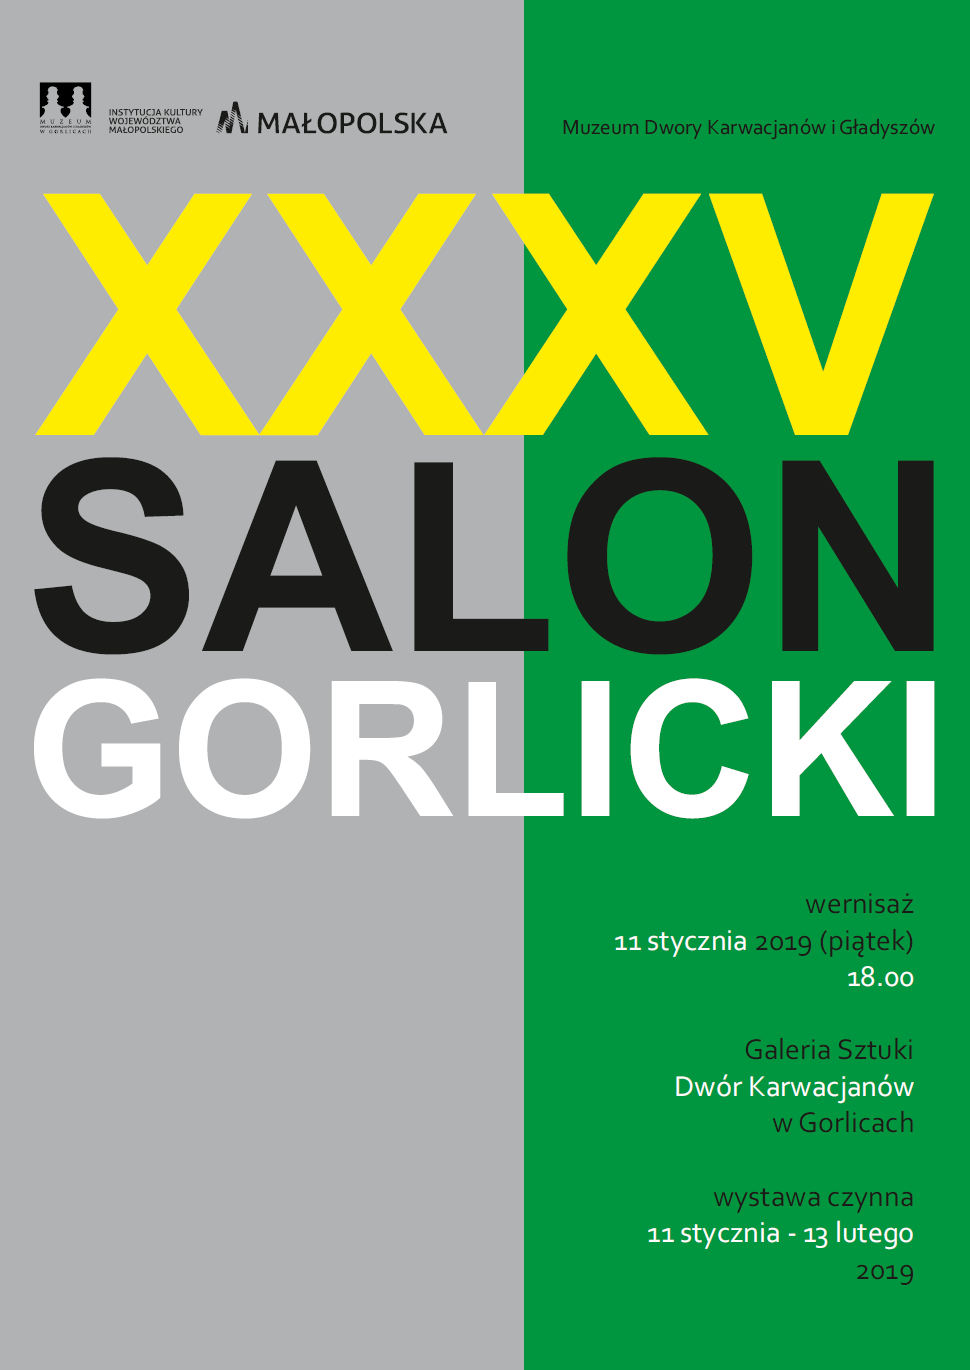 XXXV Salon Gorlicki